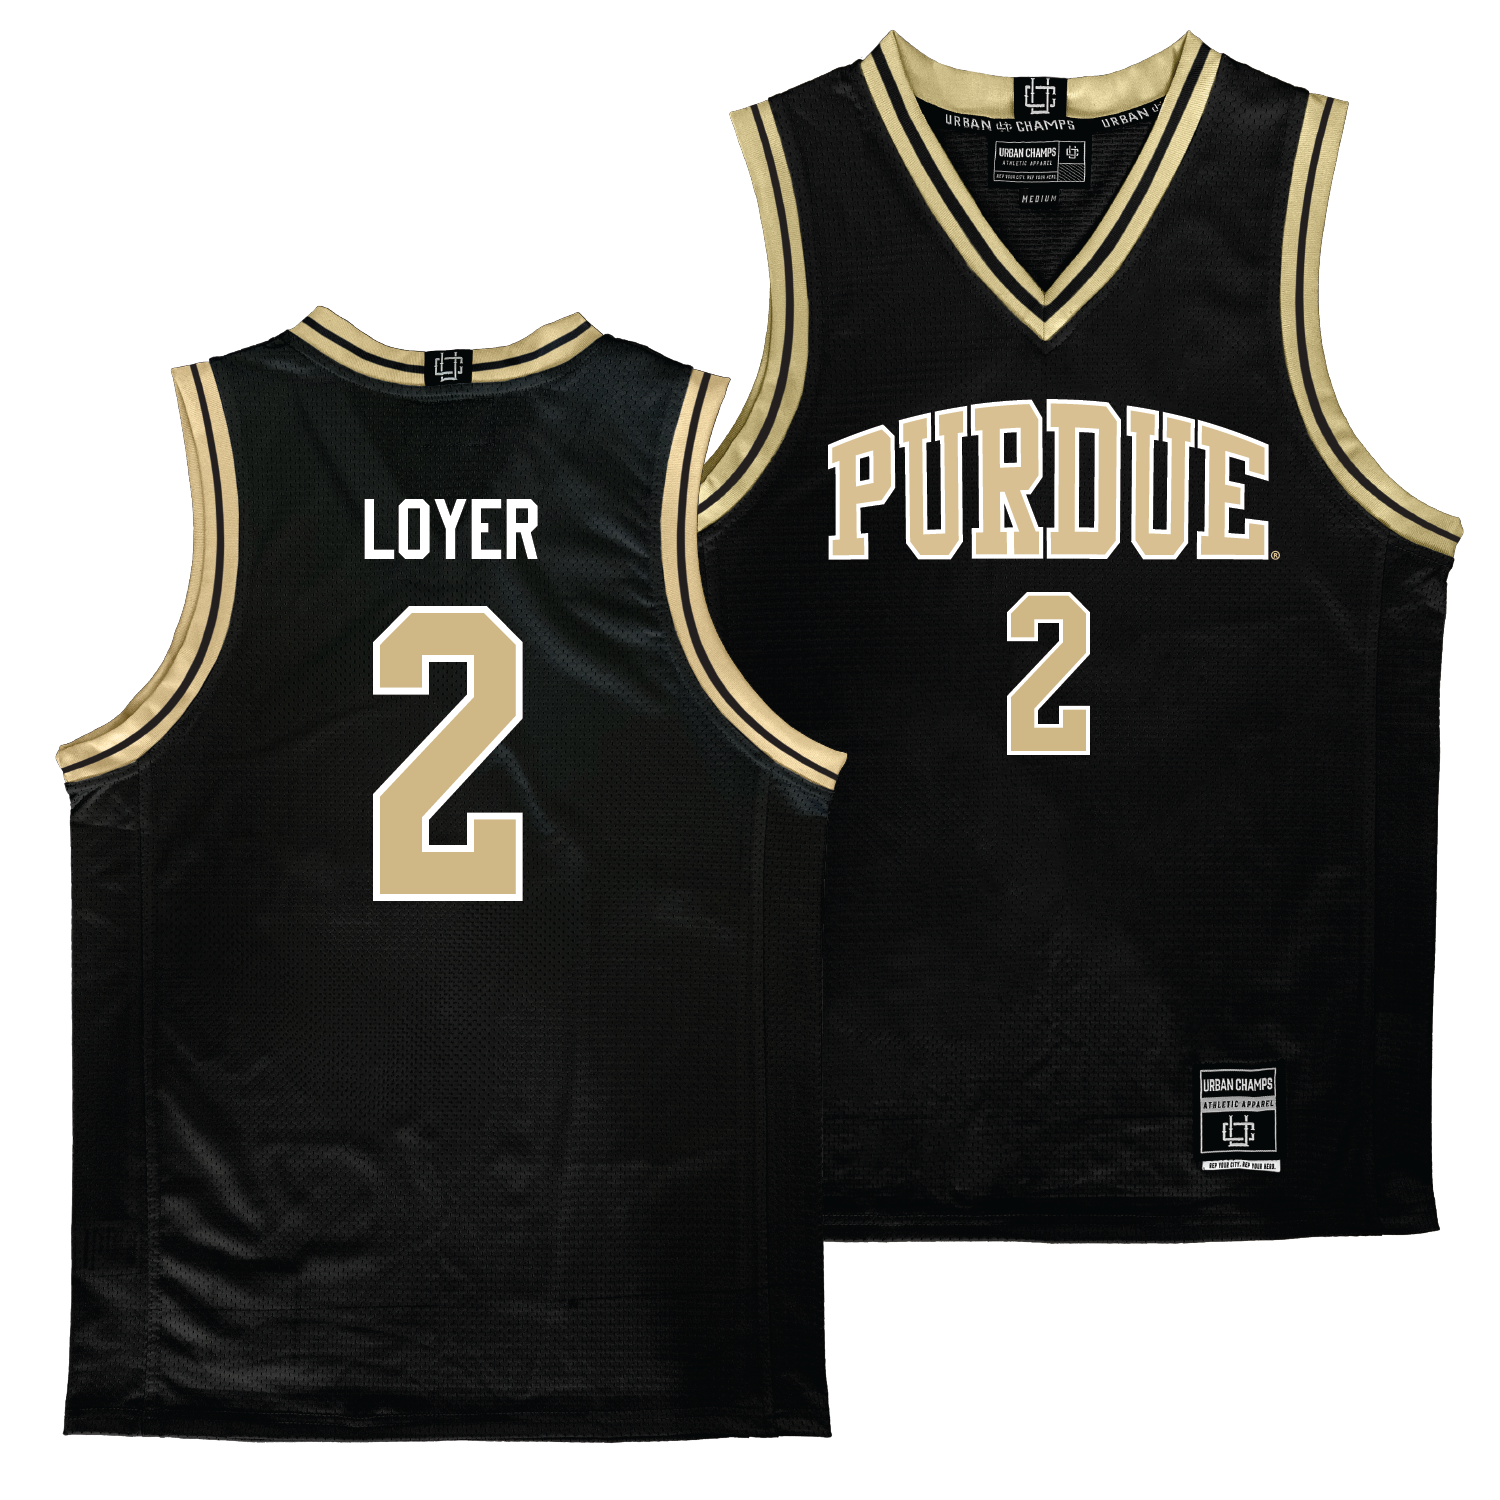 Purdue Men's Black Basketball Jersey - Fletcher Loyer | #2 Youth Small